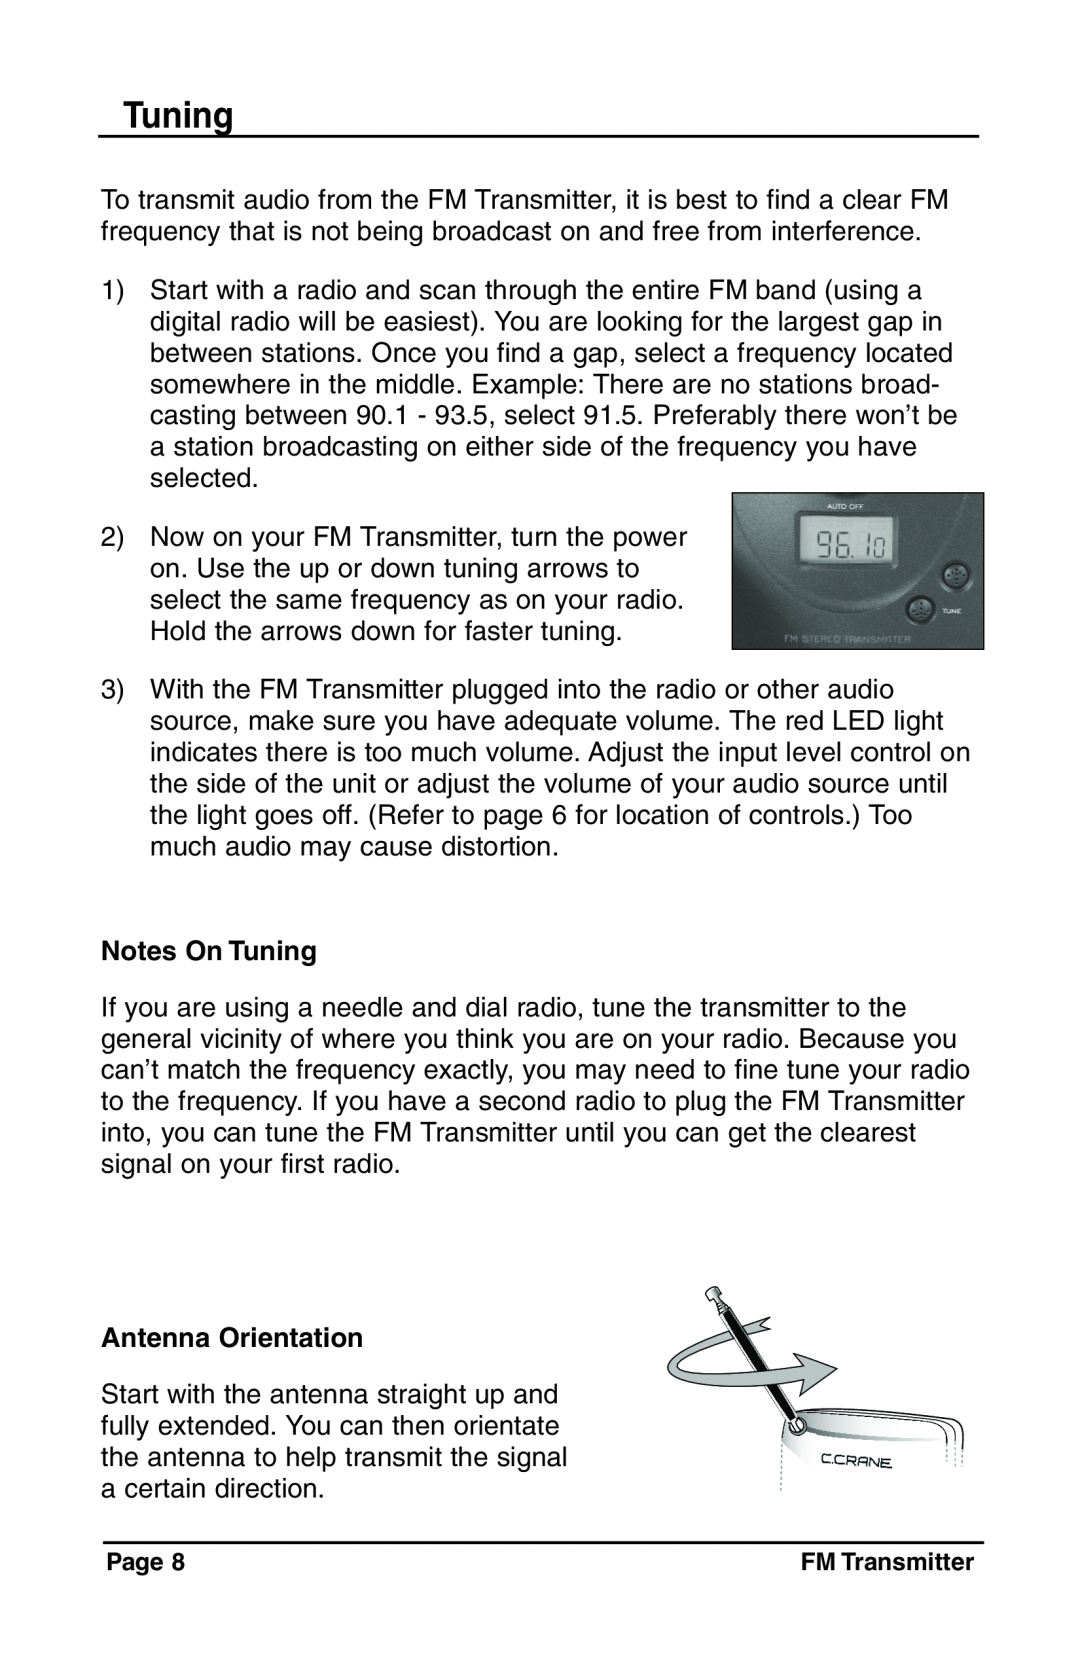 C. Crane Satellite Radio manual Notes On Tuning, Antenna Orientation 